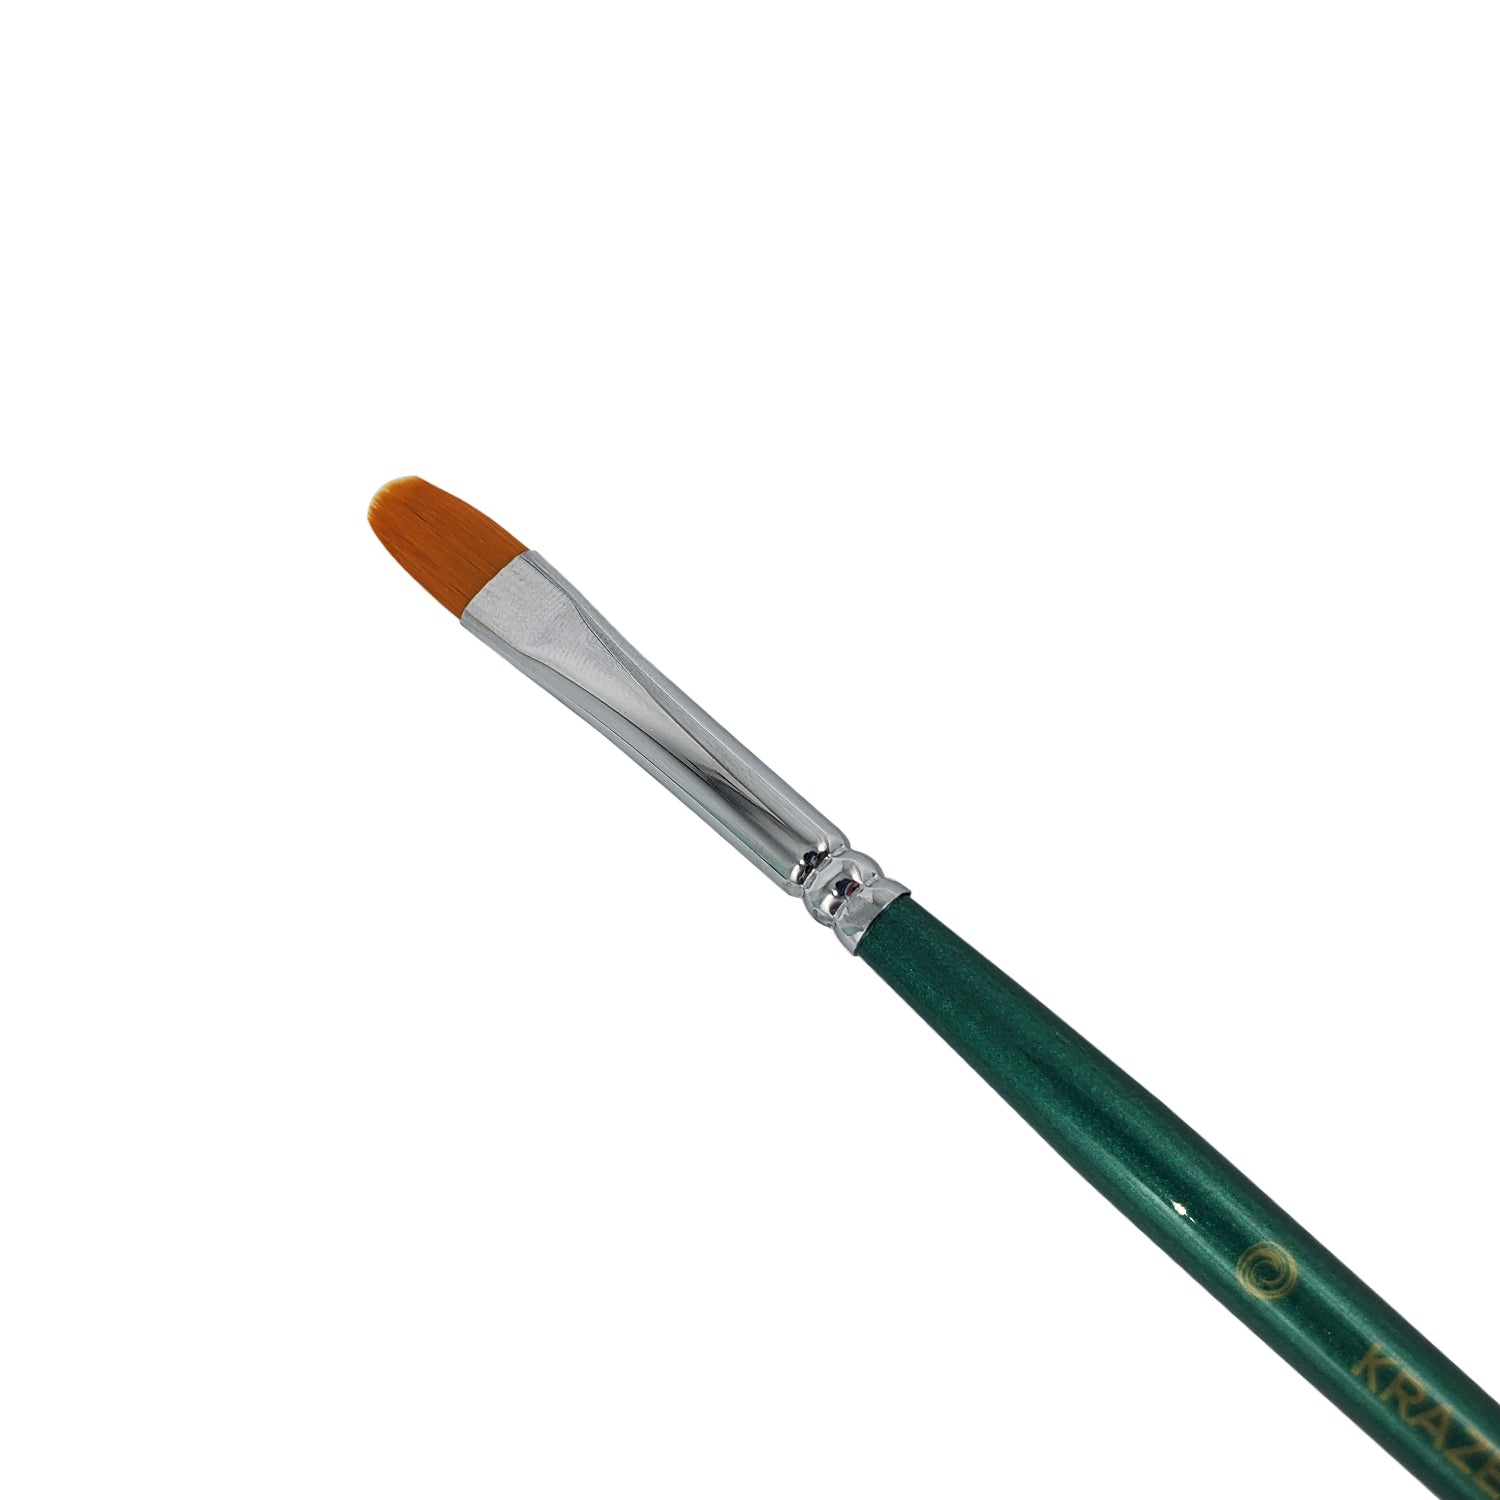 Face Painting Brush - TAG - Filbert #12 (3/4)